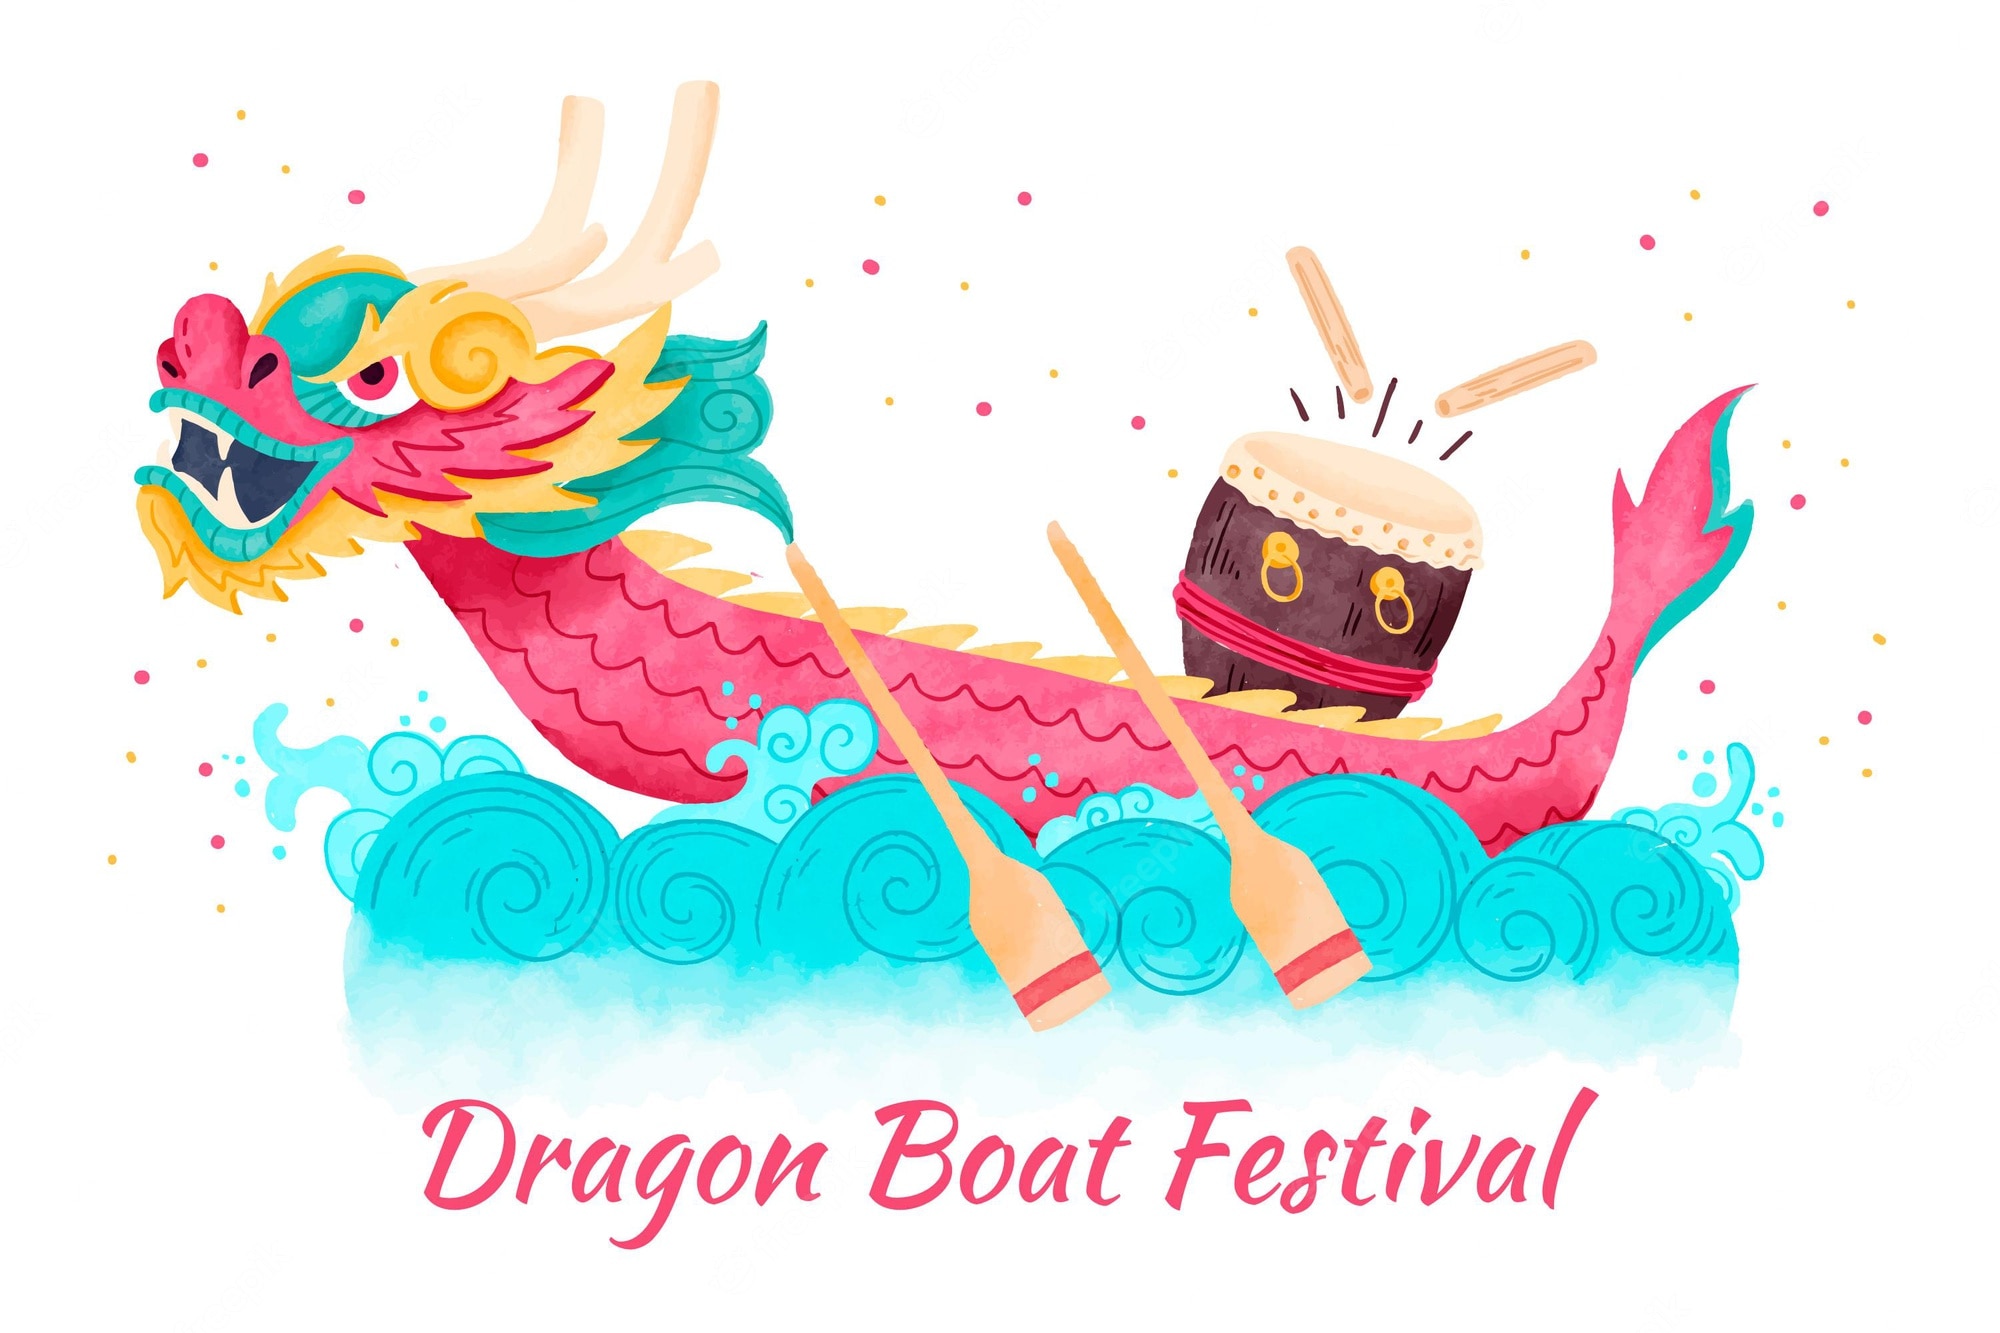 Dragon Boat Wallpaper Image. Free Vectors, & PSD